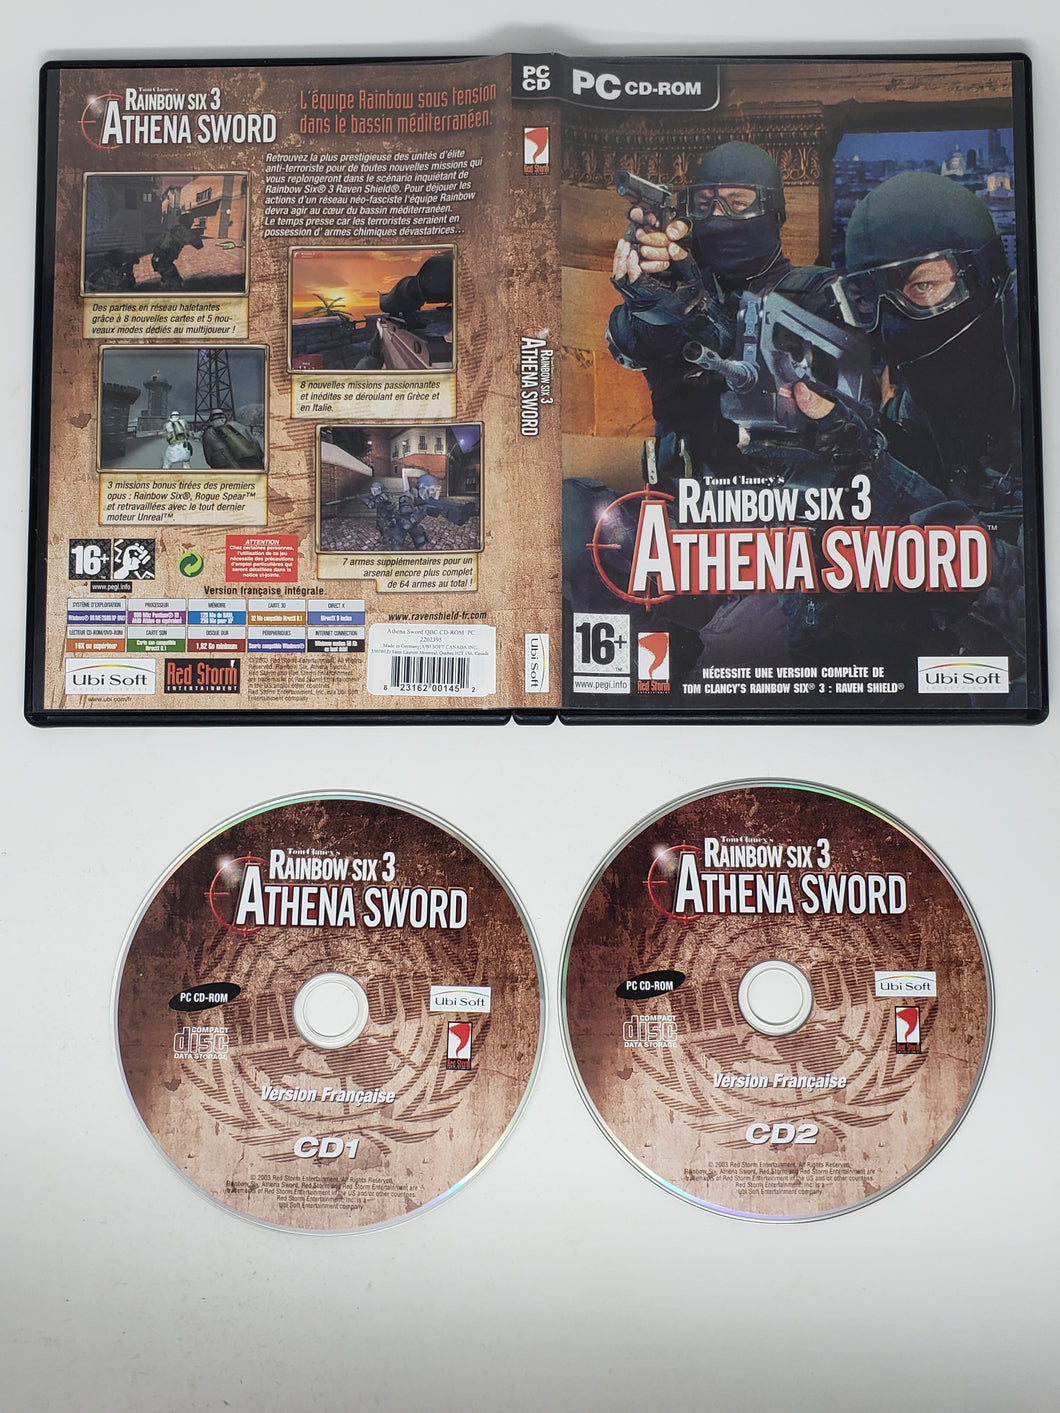 Rainbow Six 3 Athena Sword - PC Game